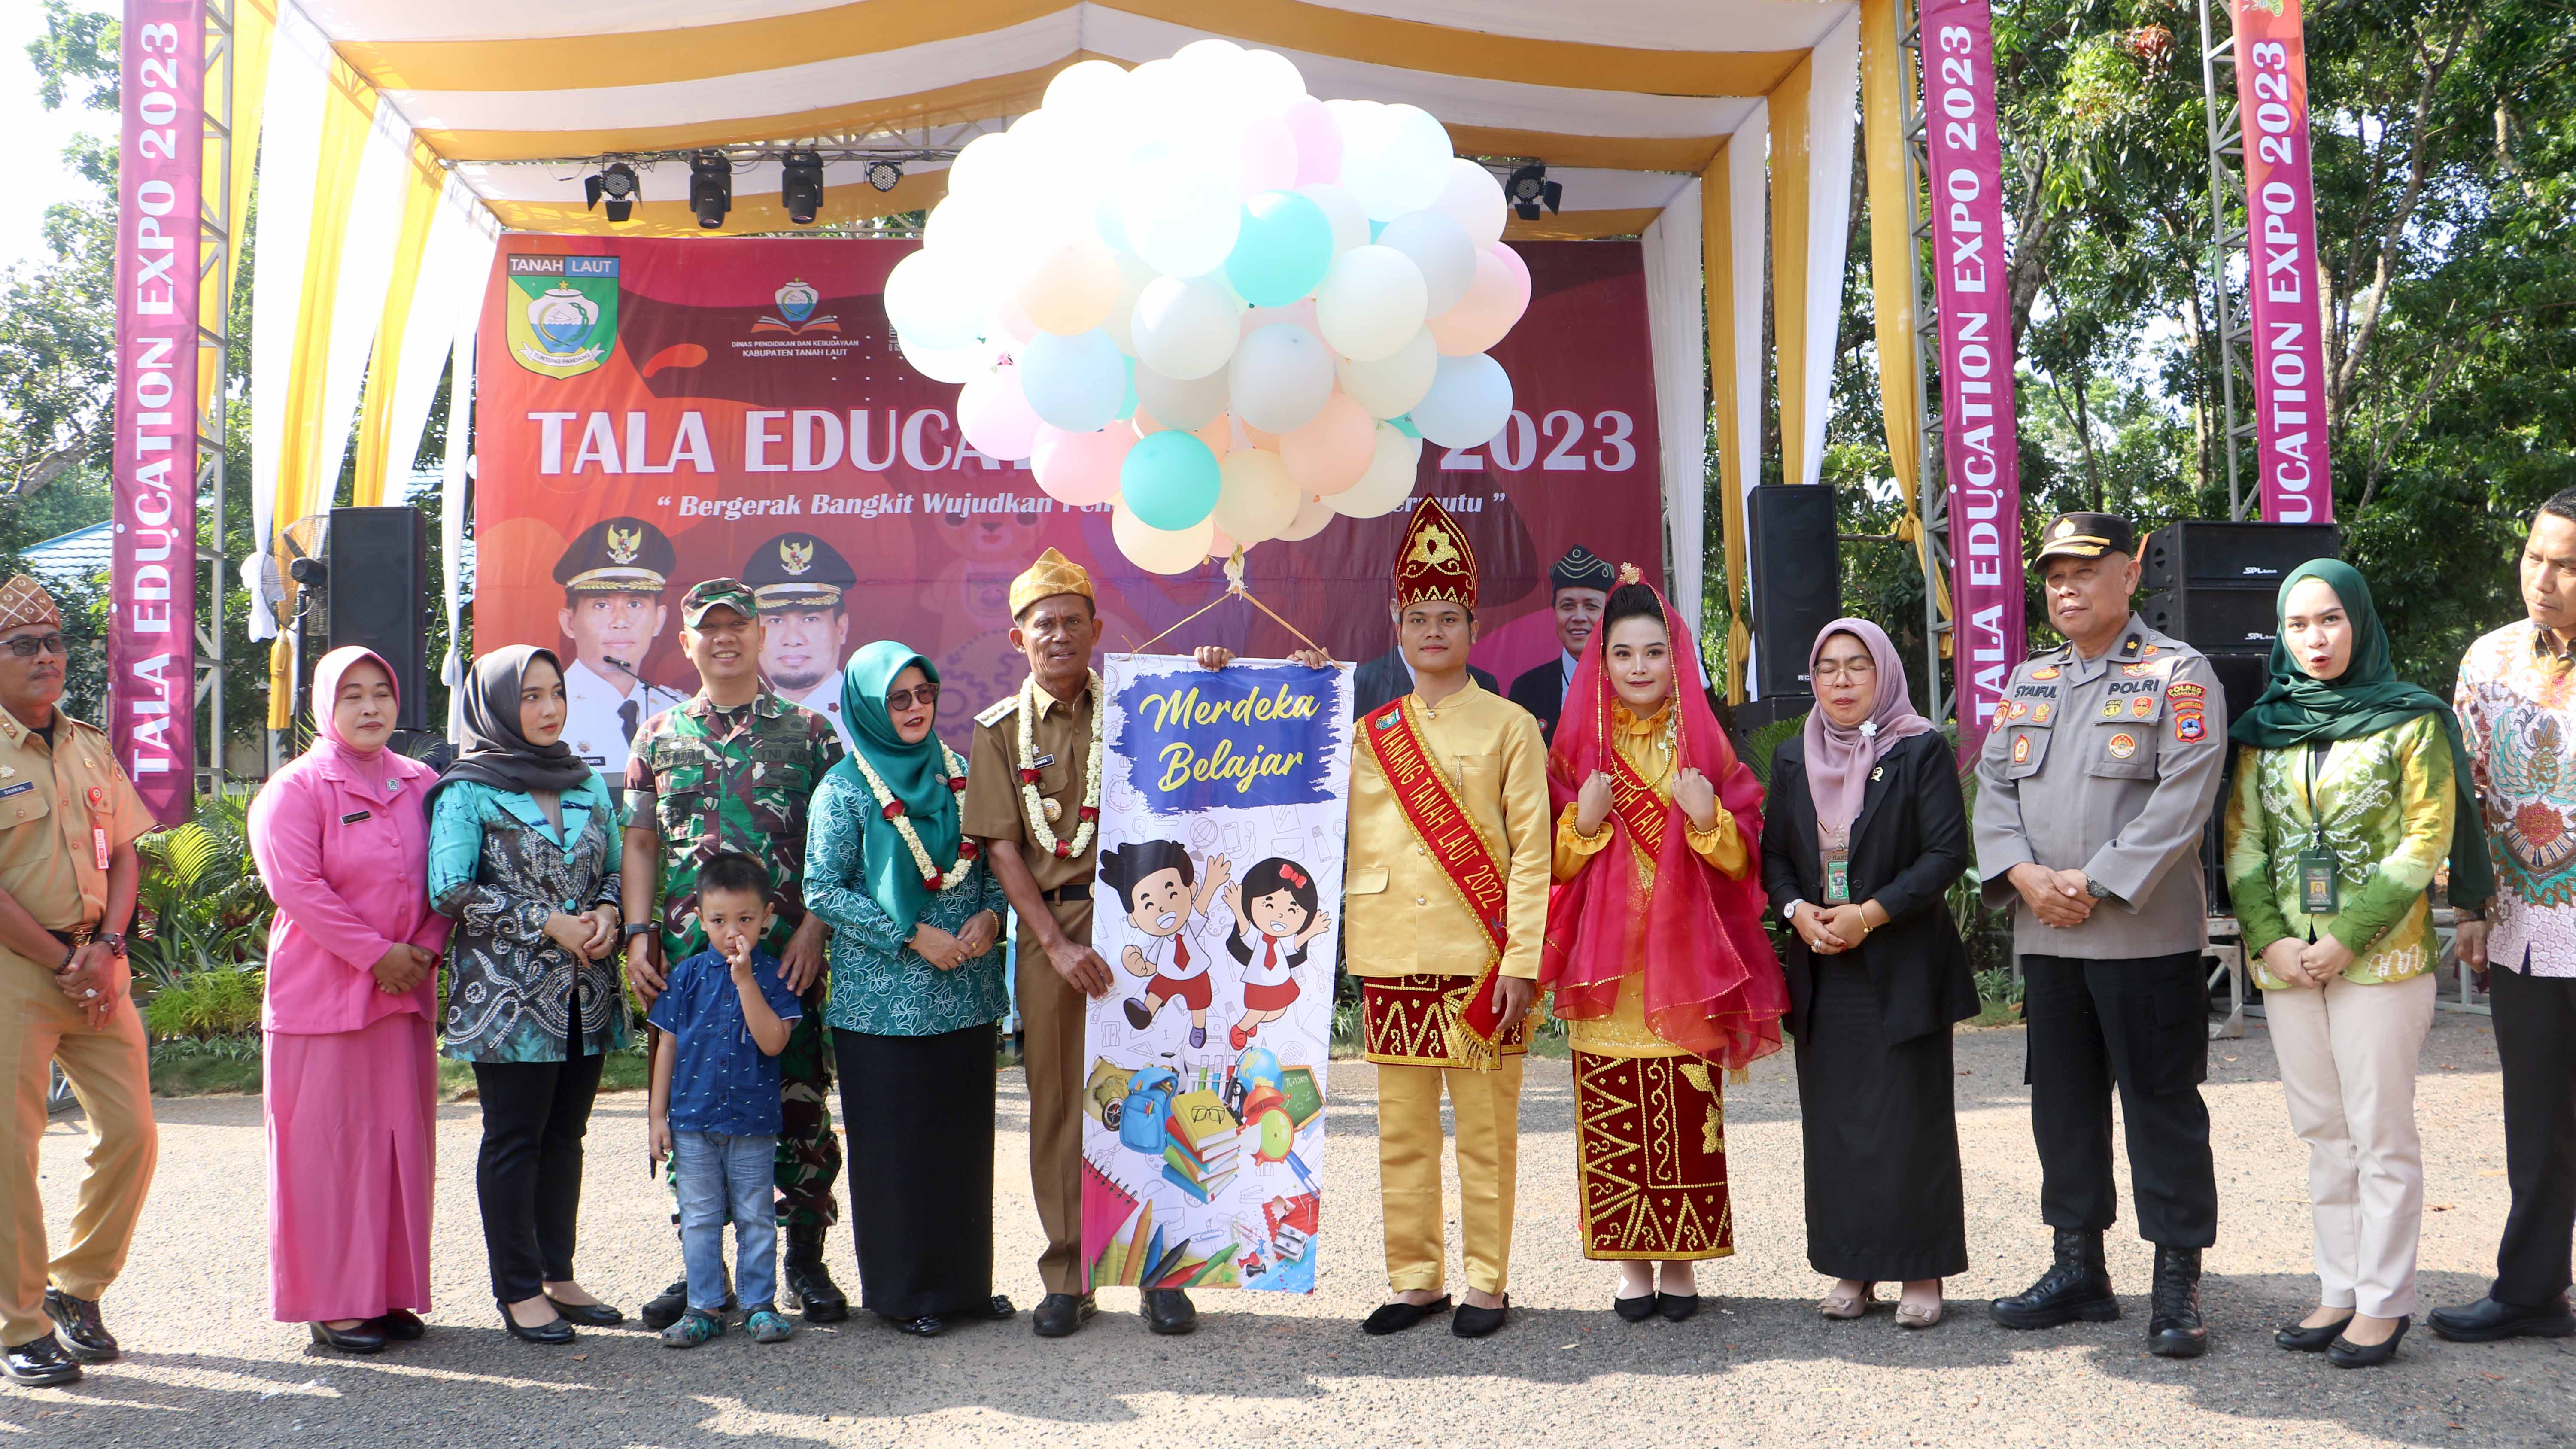 Bupati Buka Tala Education Expo 2023